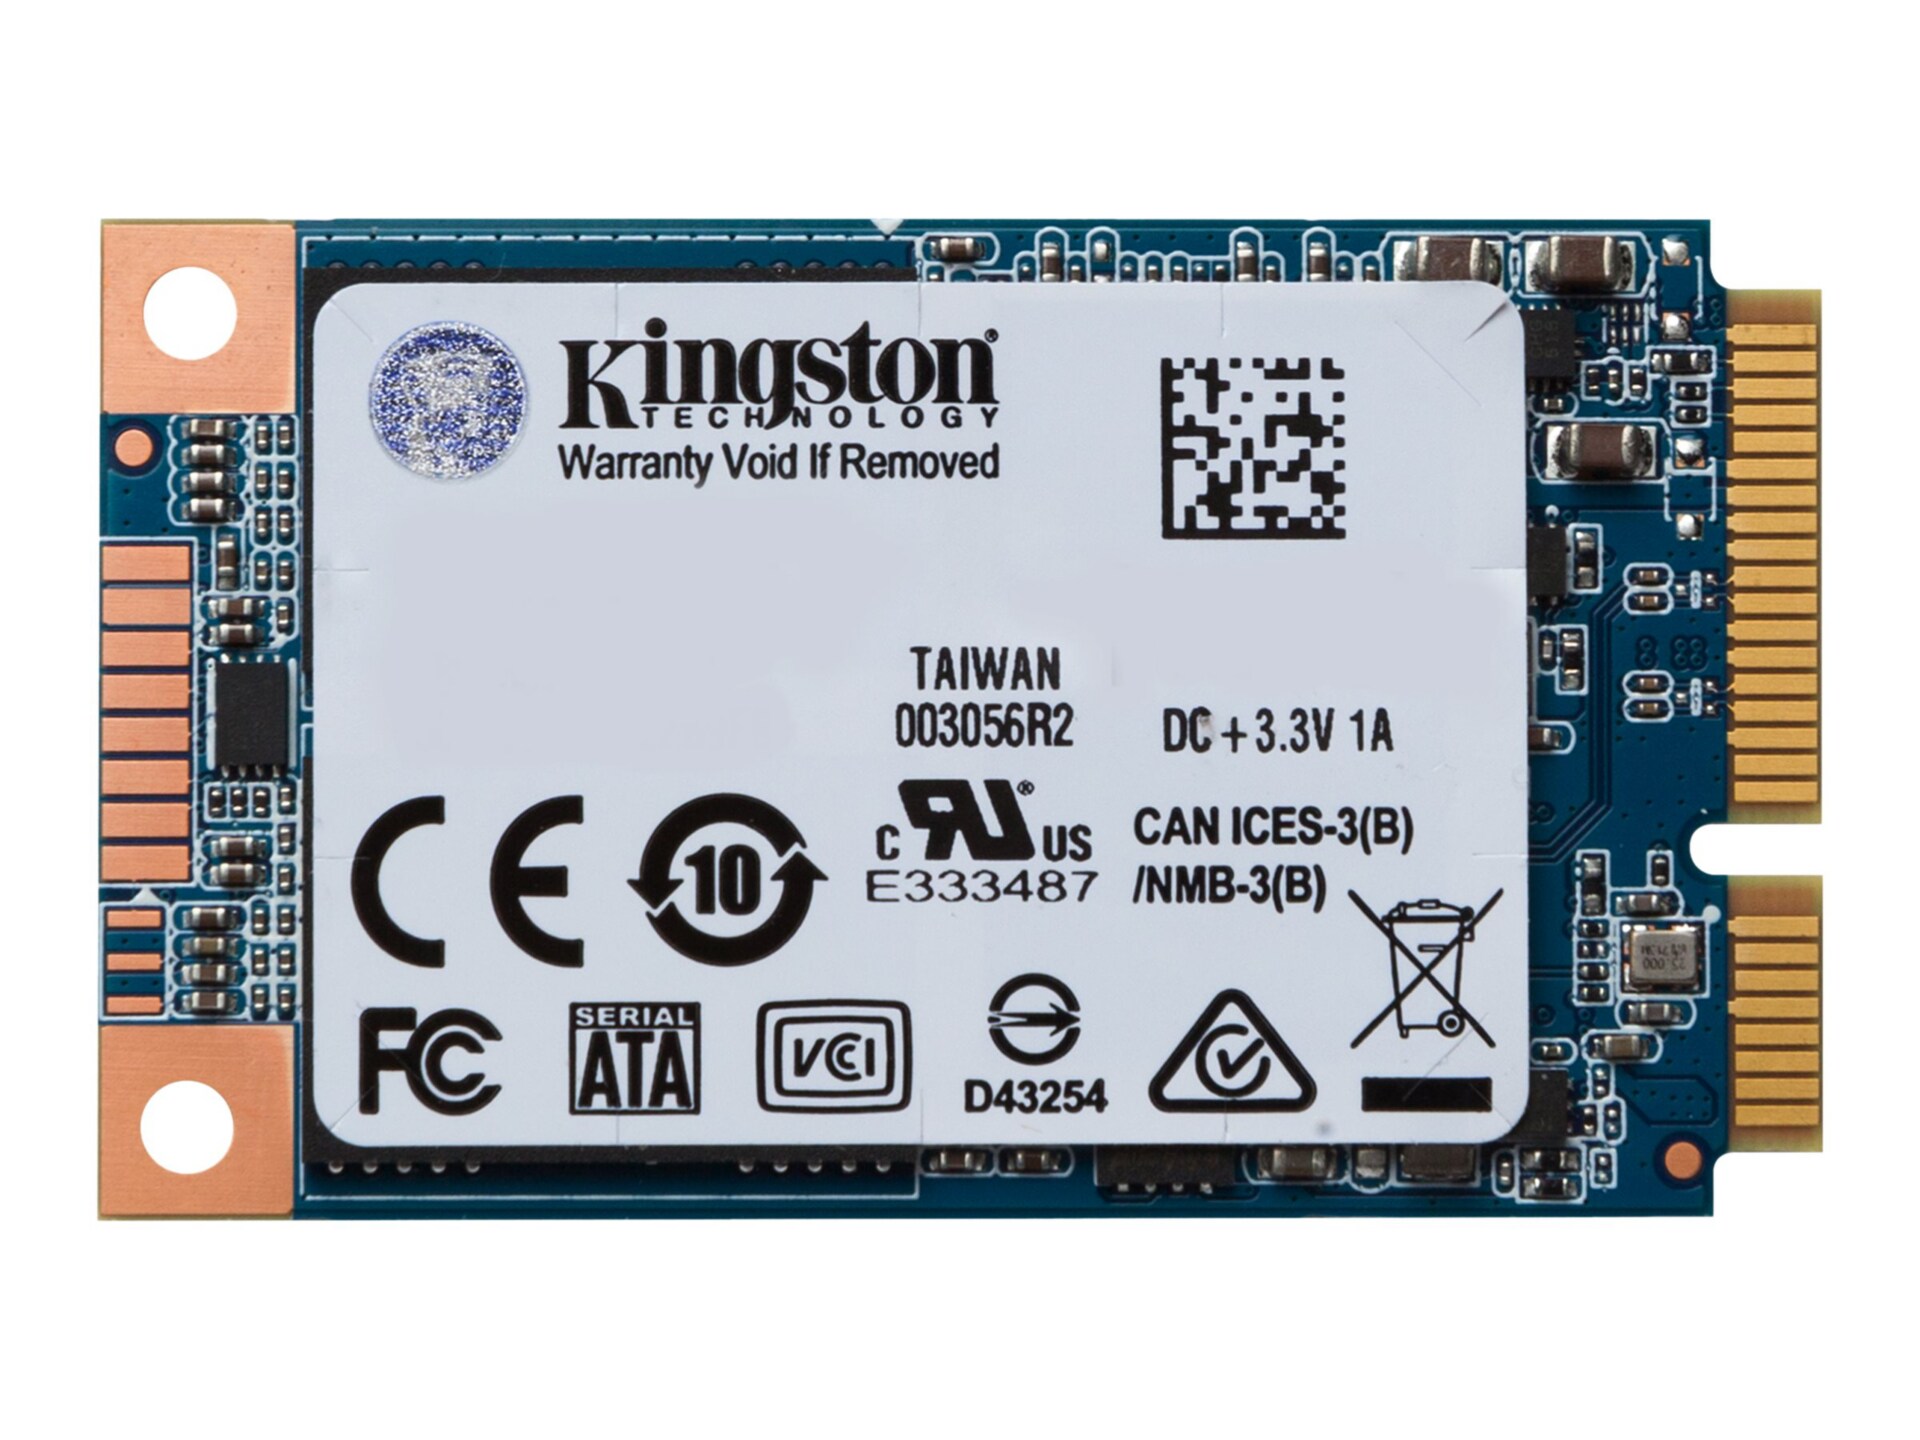 Kingston UV500 - solid state drive - 120 GB - SATA 6Gb/s